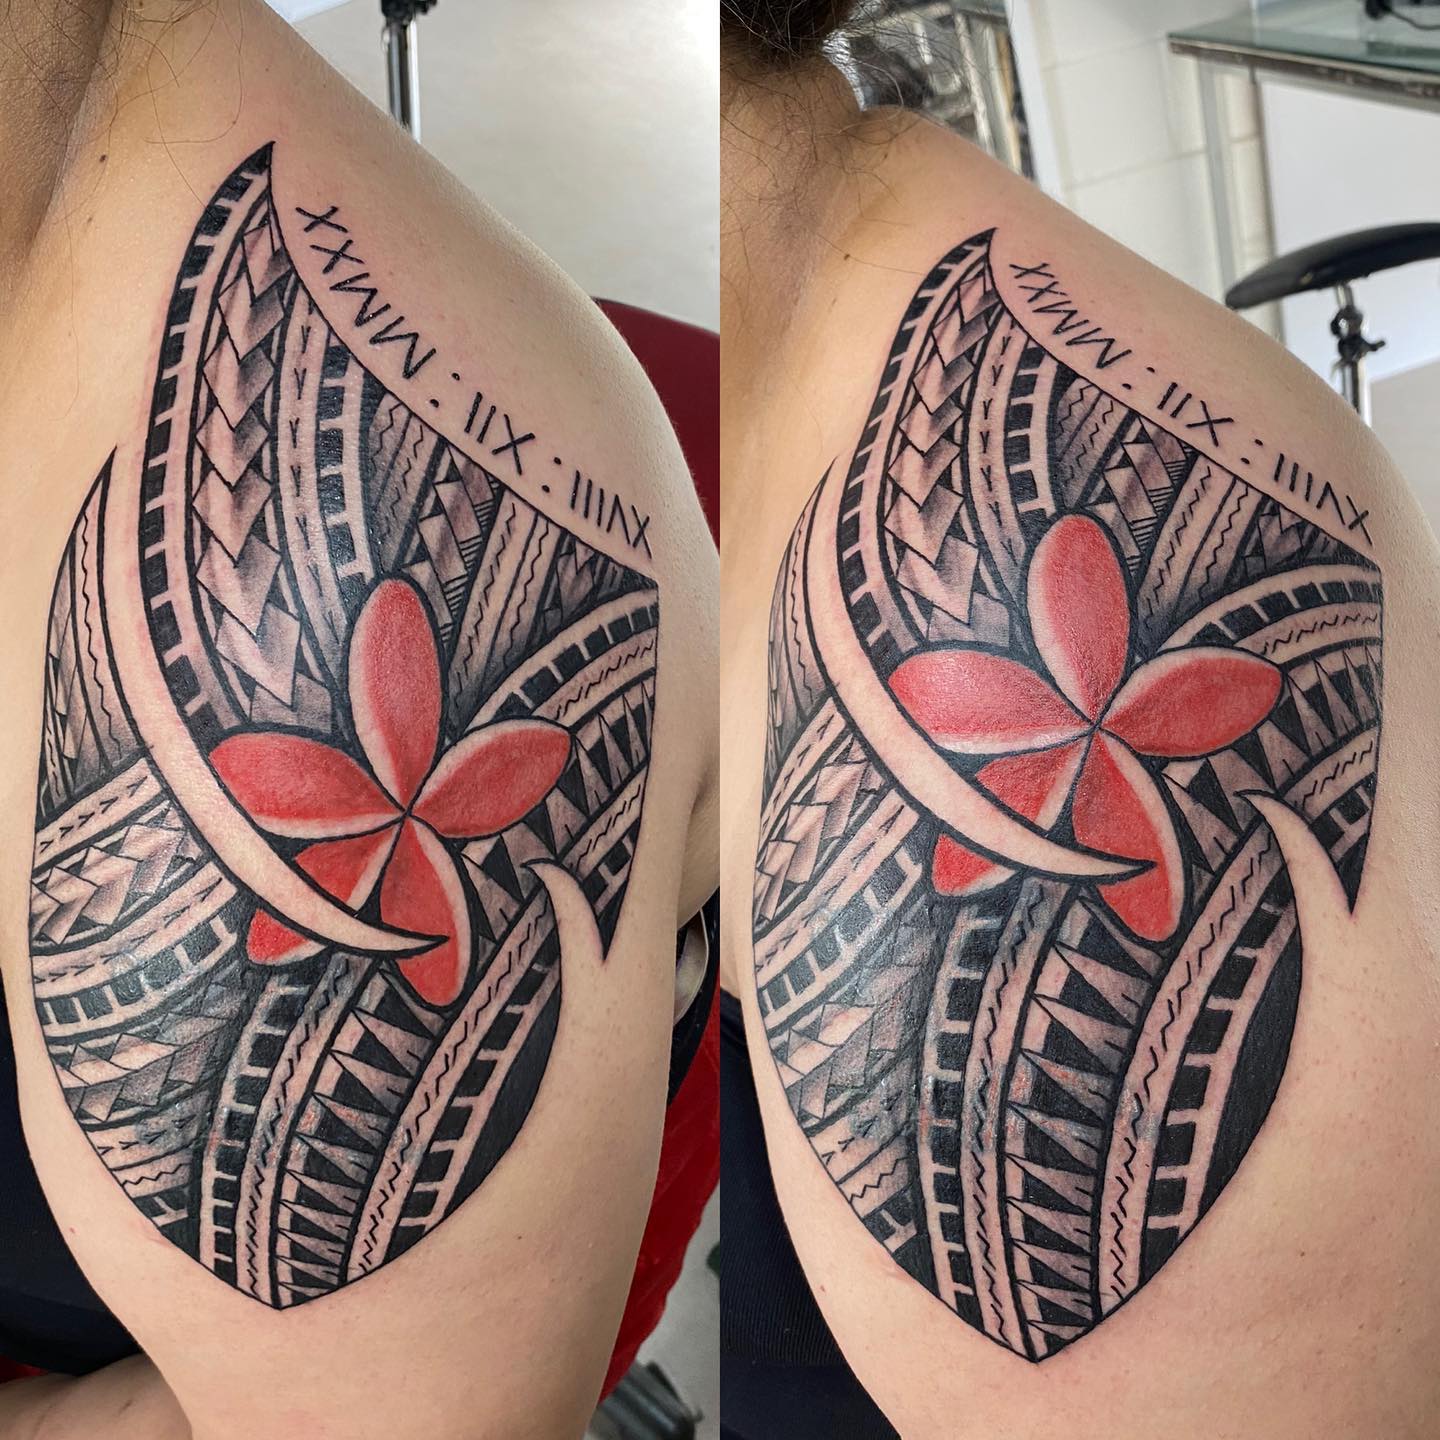 Tatuaje samoano con una flor